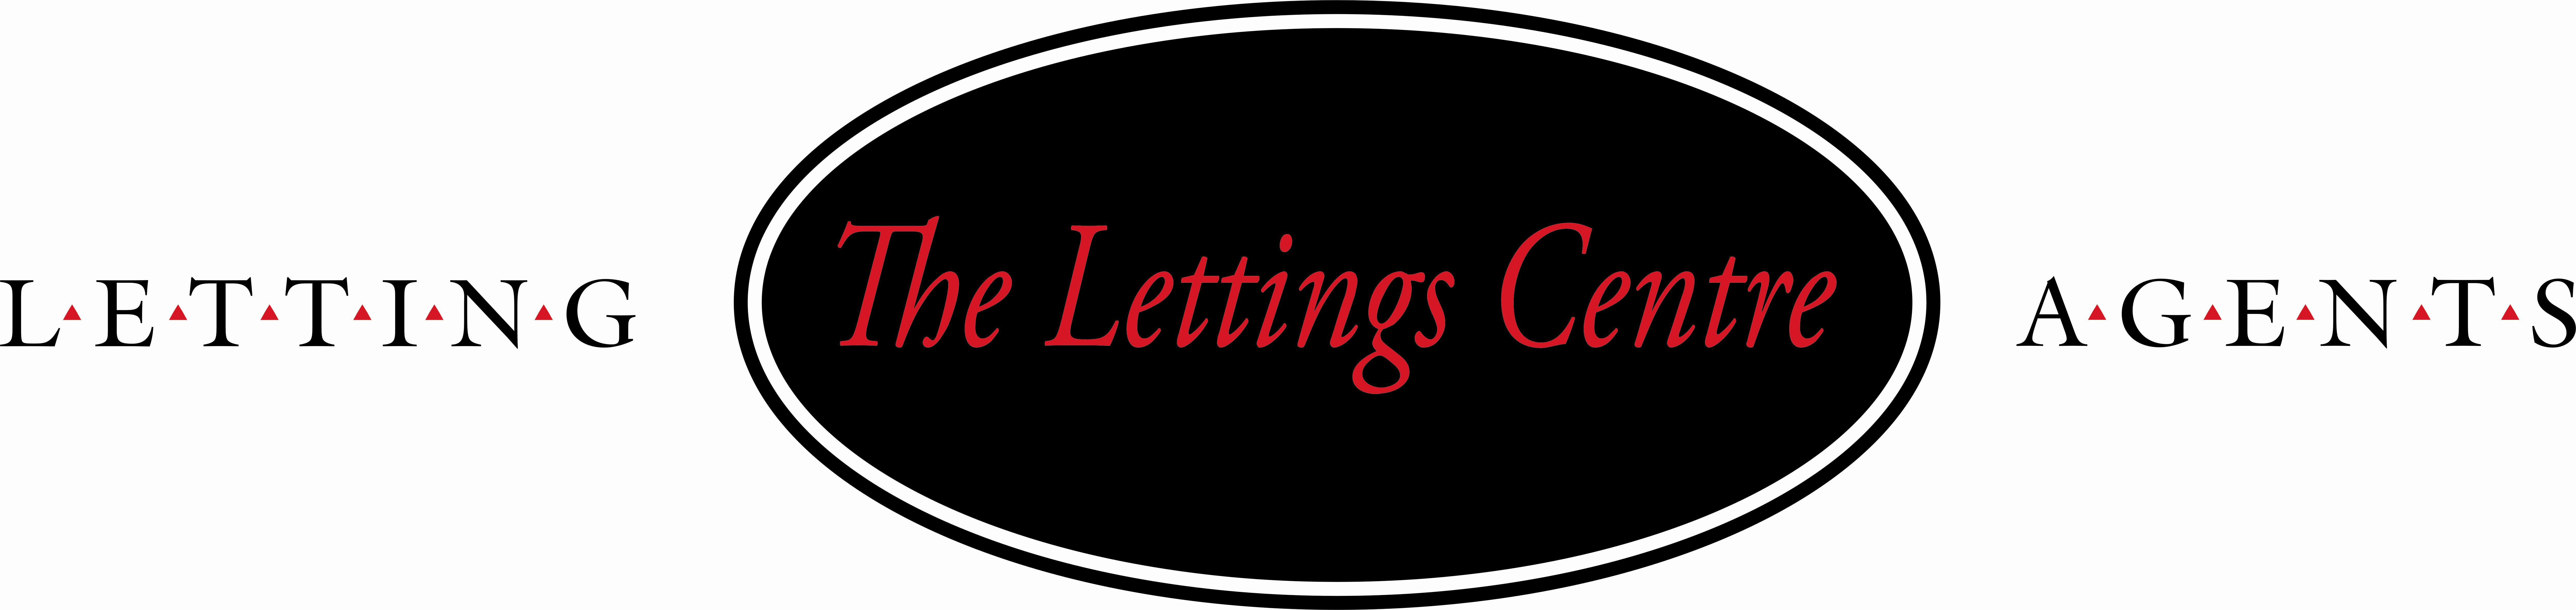 The Lettings Centre Ltd